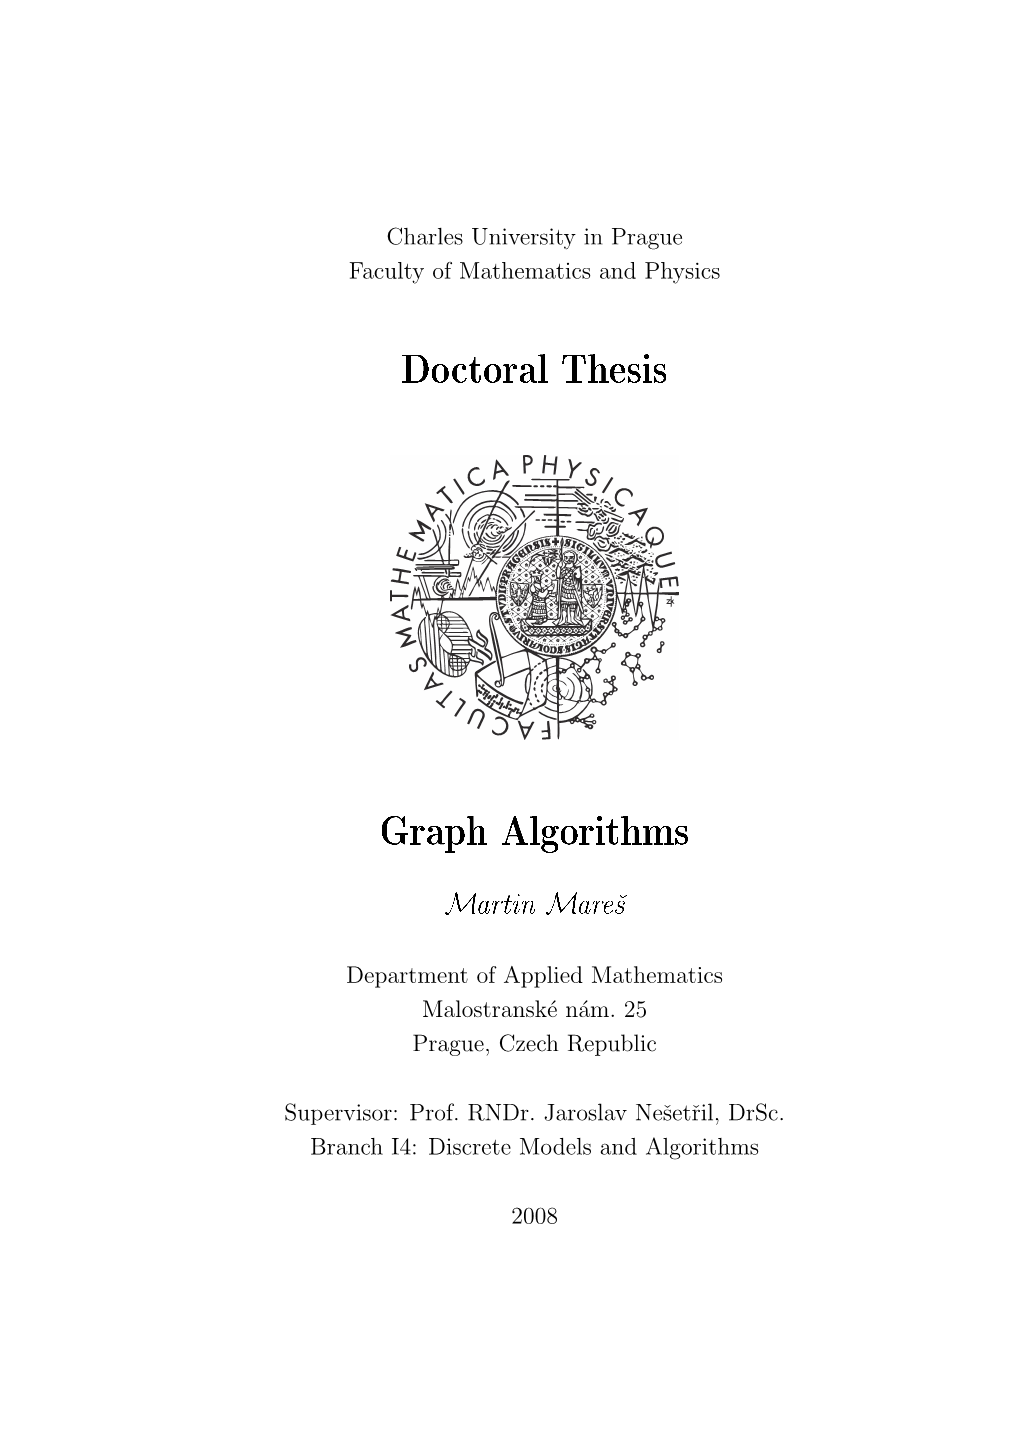 Doctoral Thesis Graph Algorithms